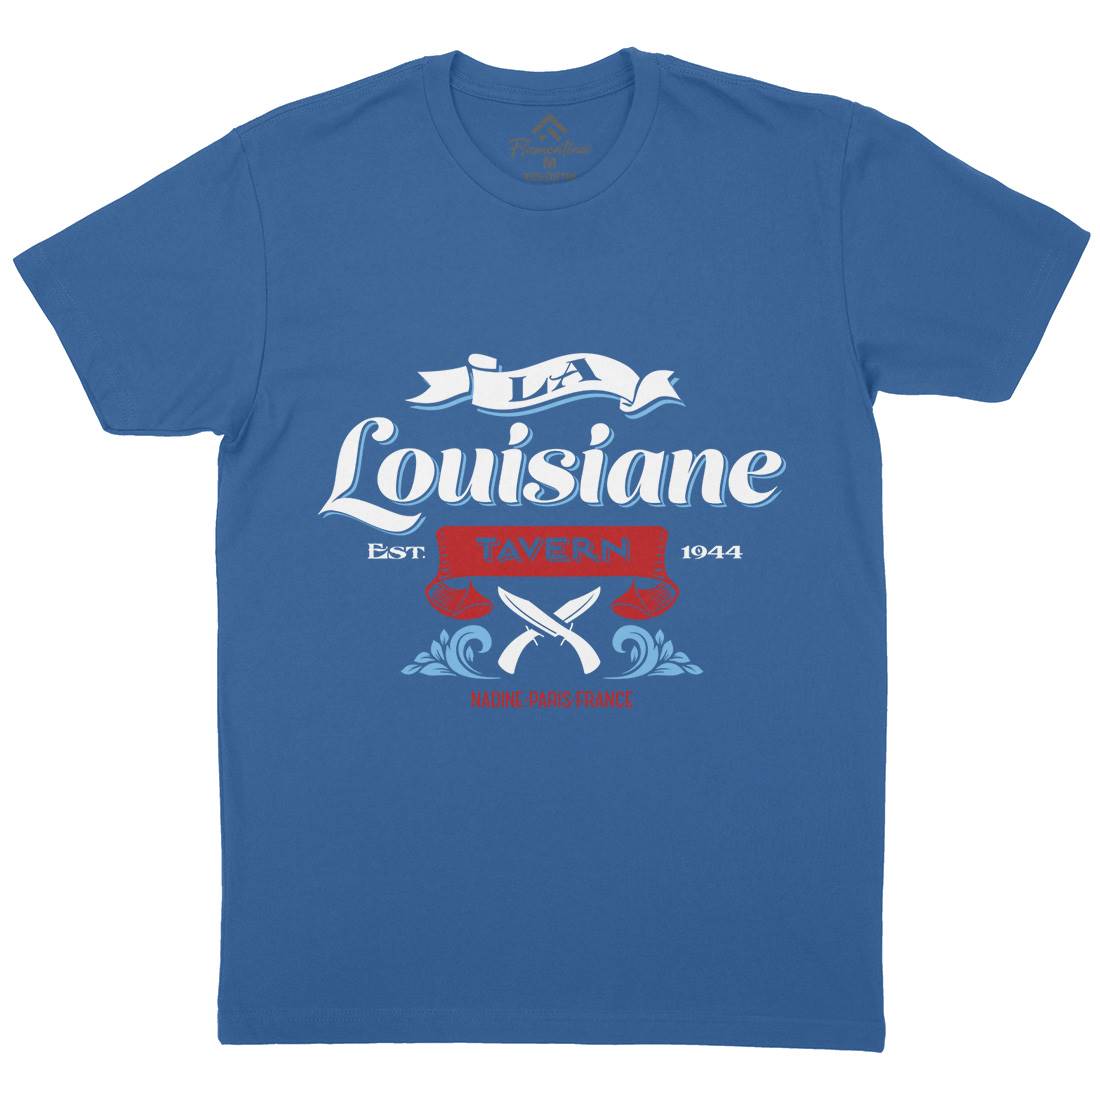 La Louisiane Tavern Mens Crew Neck T-Shirt Food D317